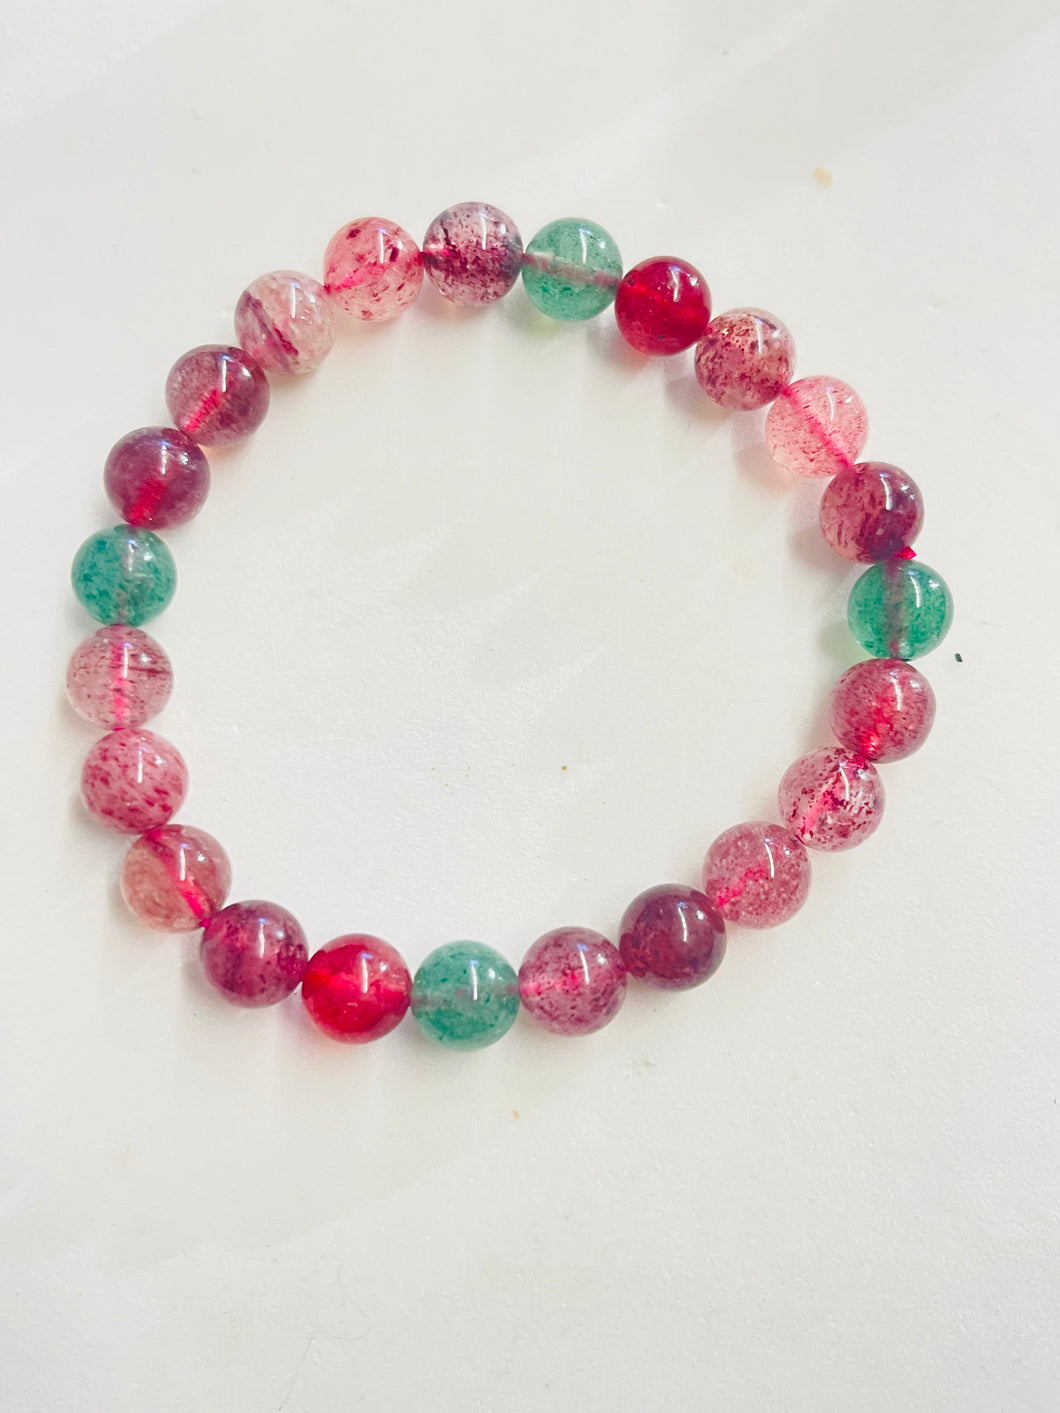 Bracelet with colorful rutilated quartz